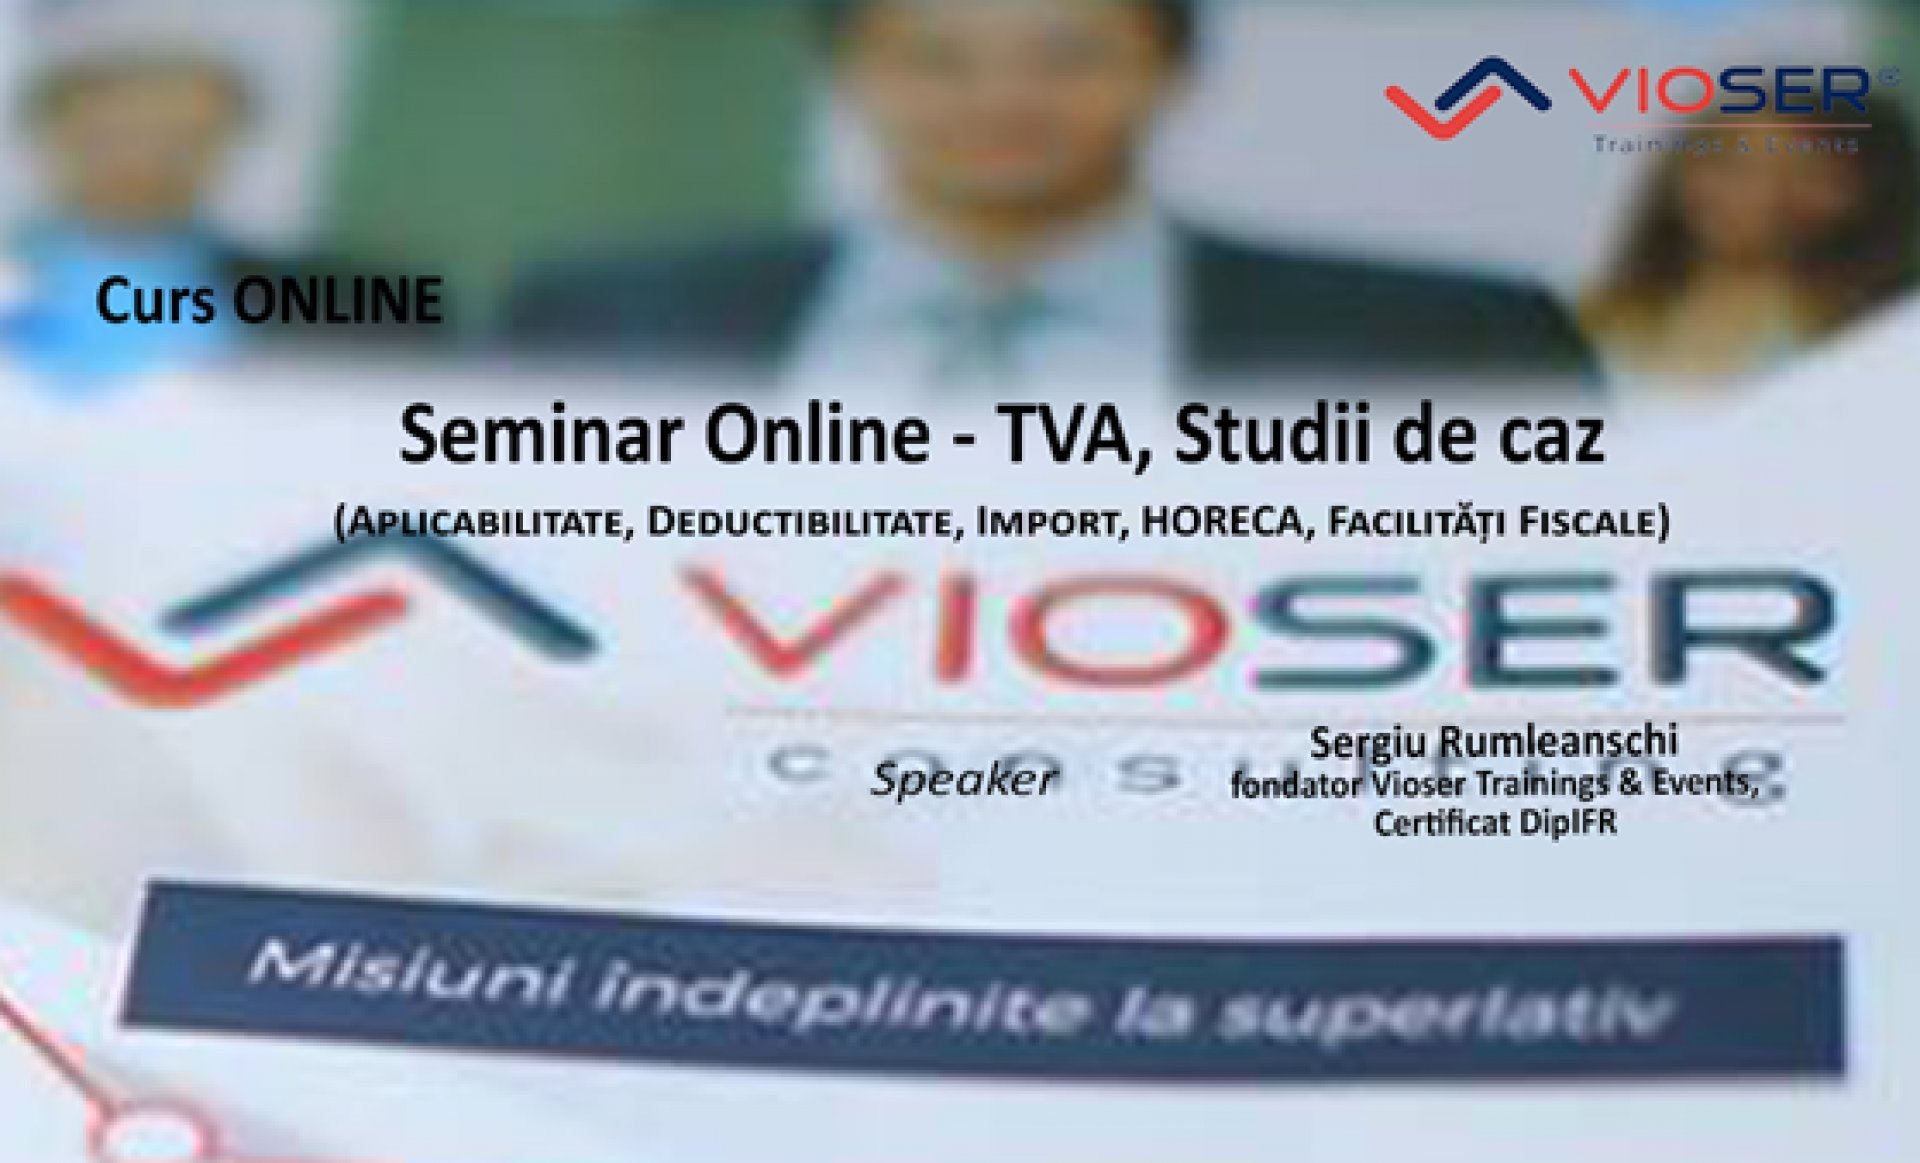 Seminar Online - TVA, Studii de caz 